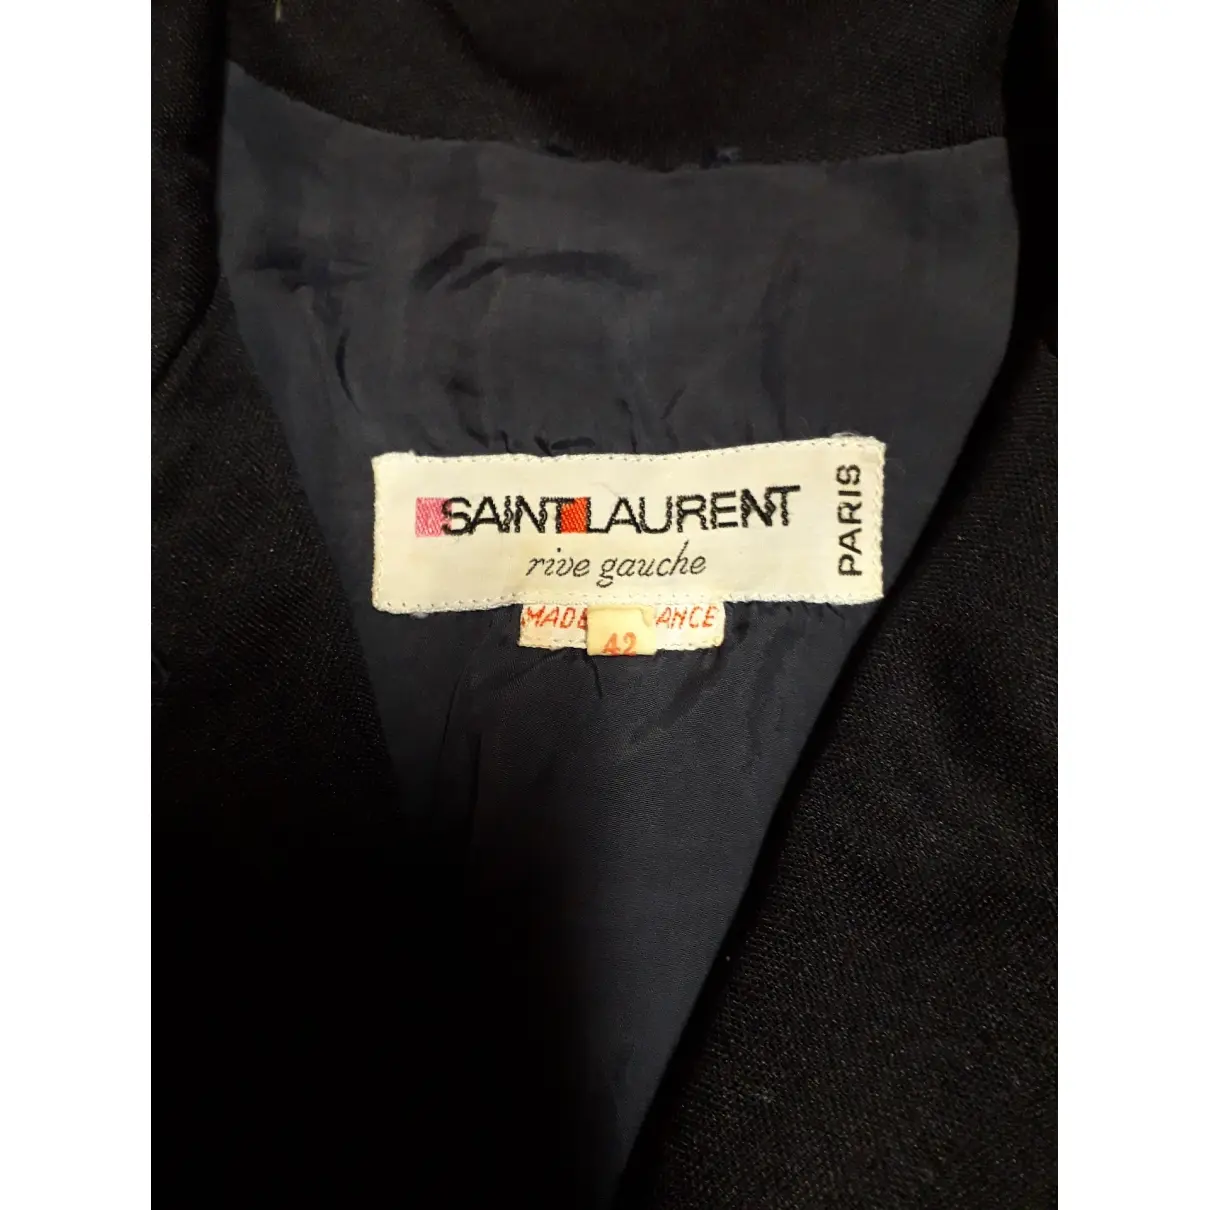 Yves Saint Laurent Mid-length dress for sale - Vintage